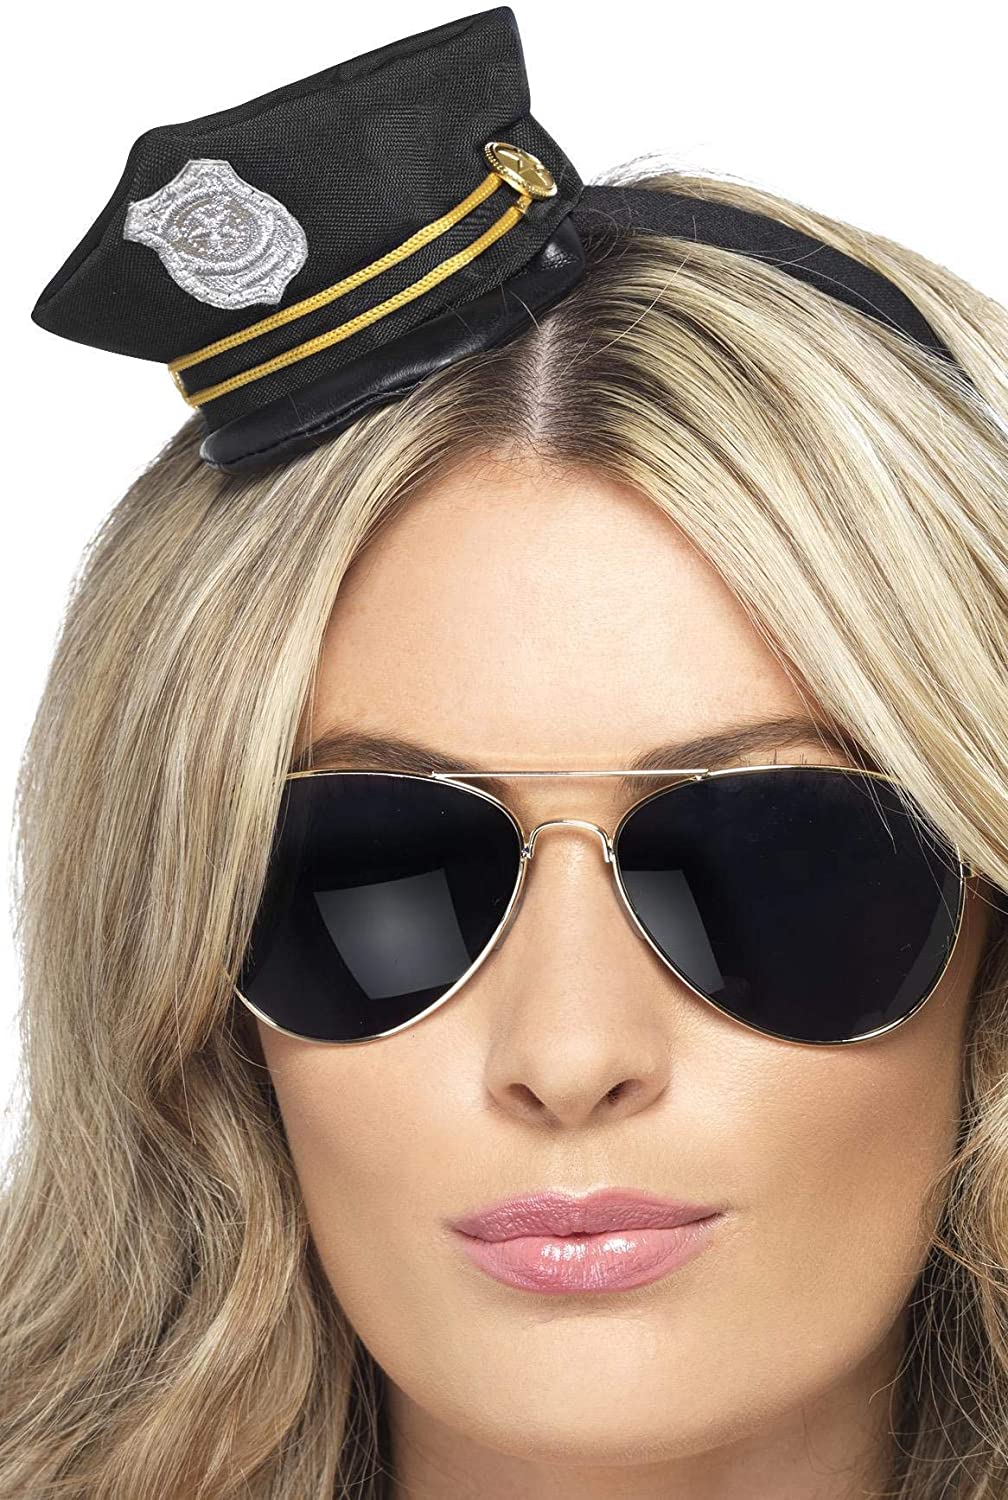 Smiffys Women's Mini Cop Hat, Black, One Size, 22740